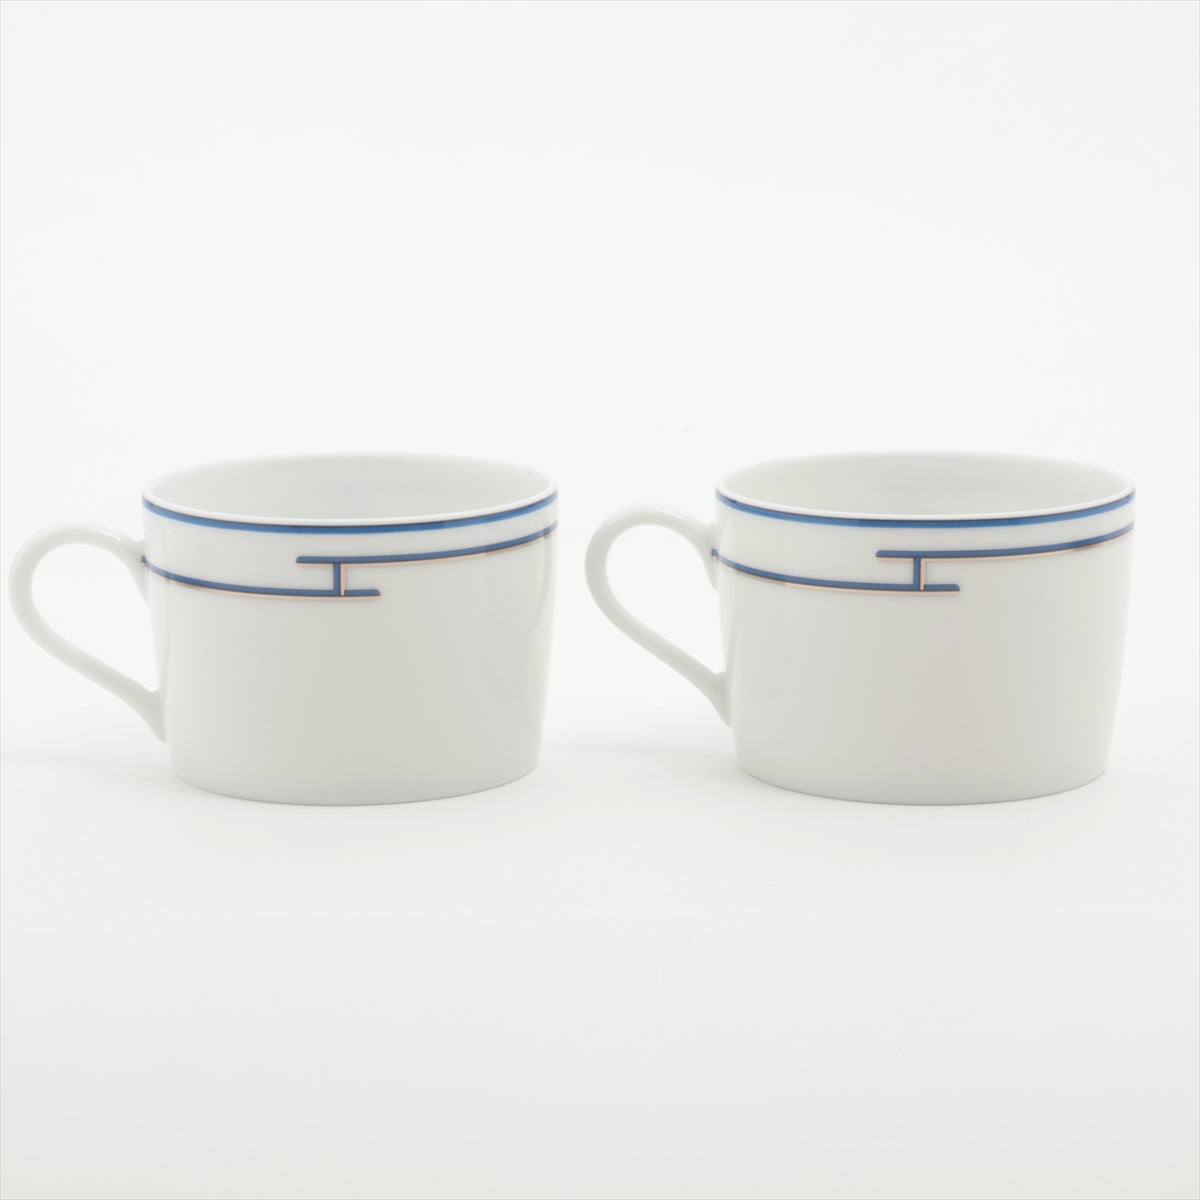 Hermès Rhythm cup and saucer Ceramic Blue x white 2 guests pair set